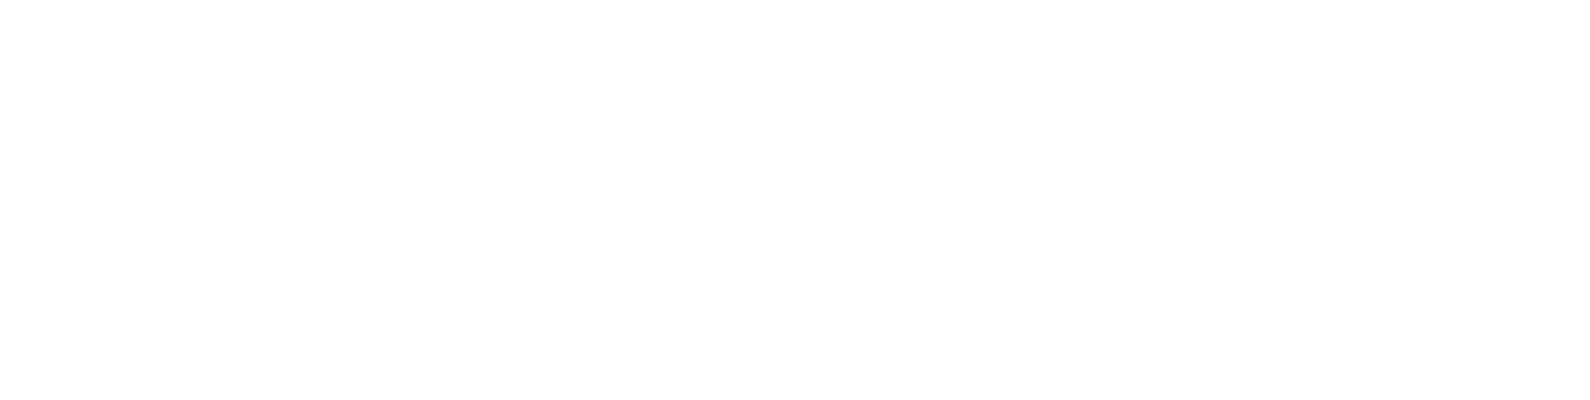 Accelerator team logo